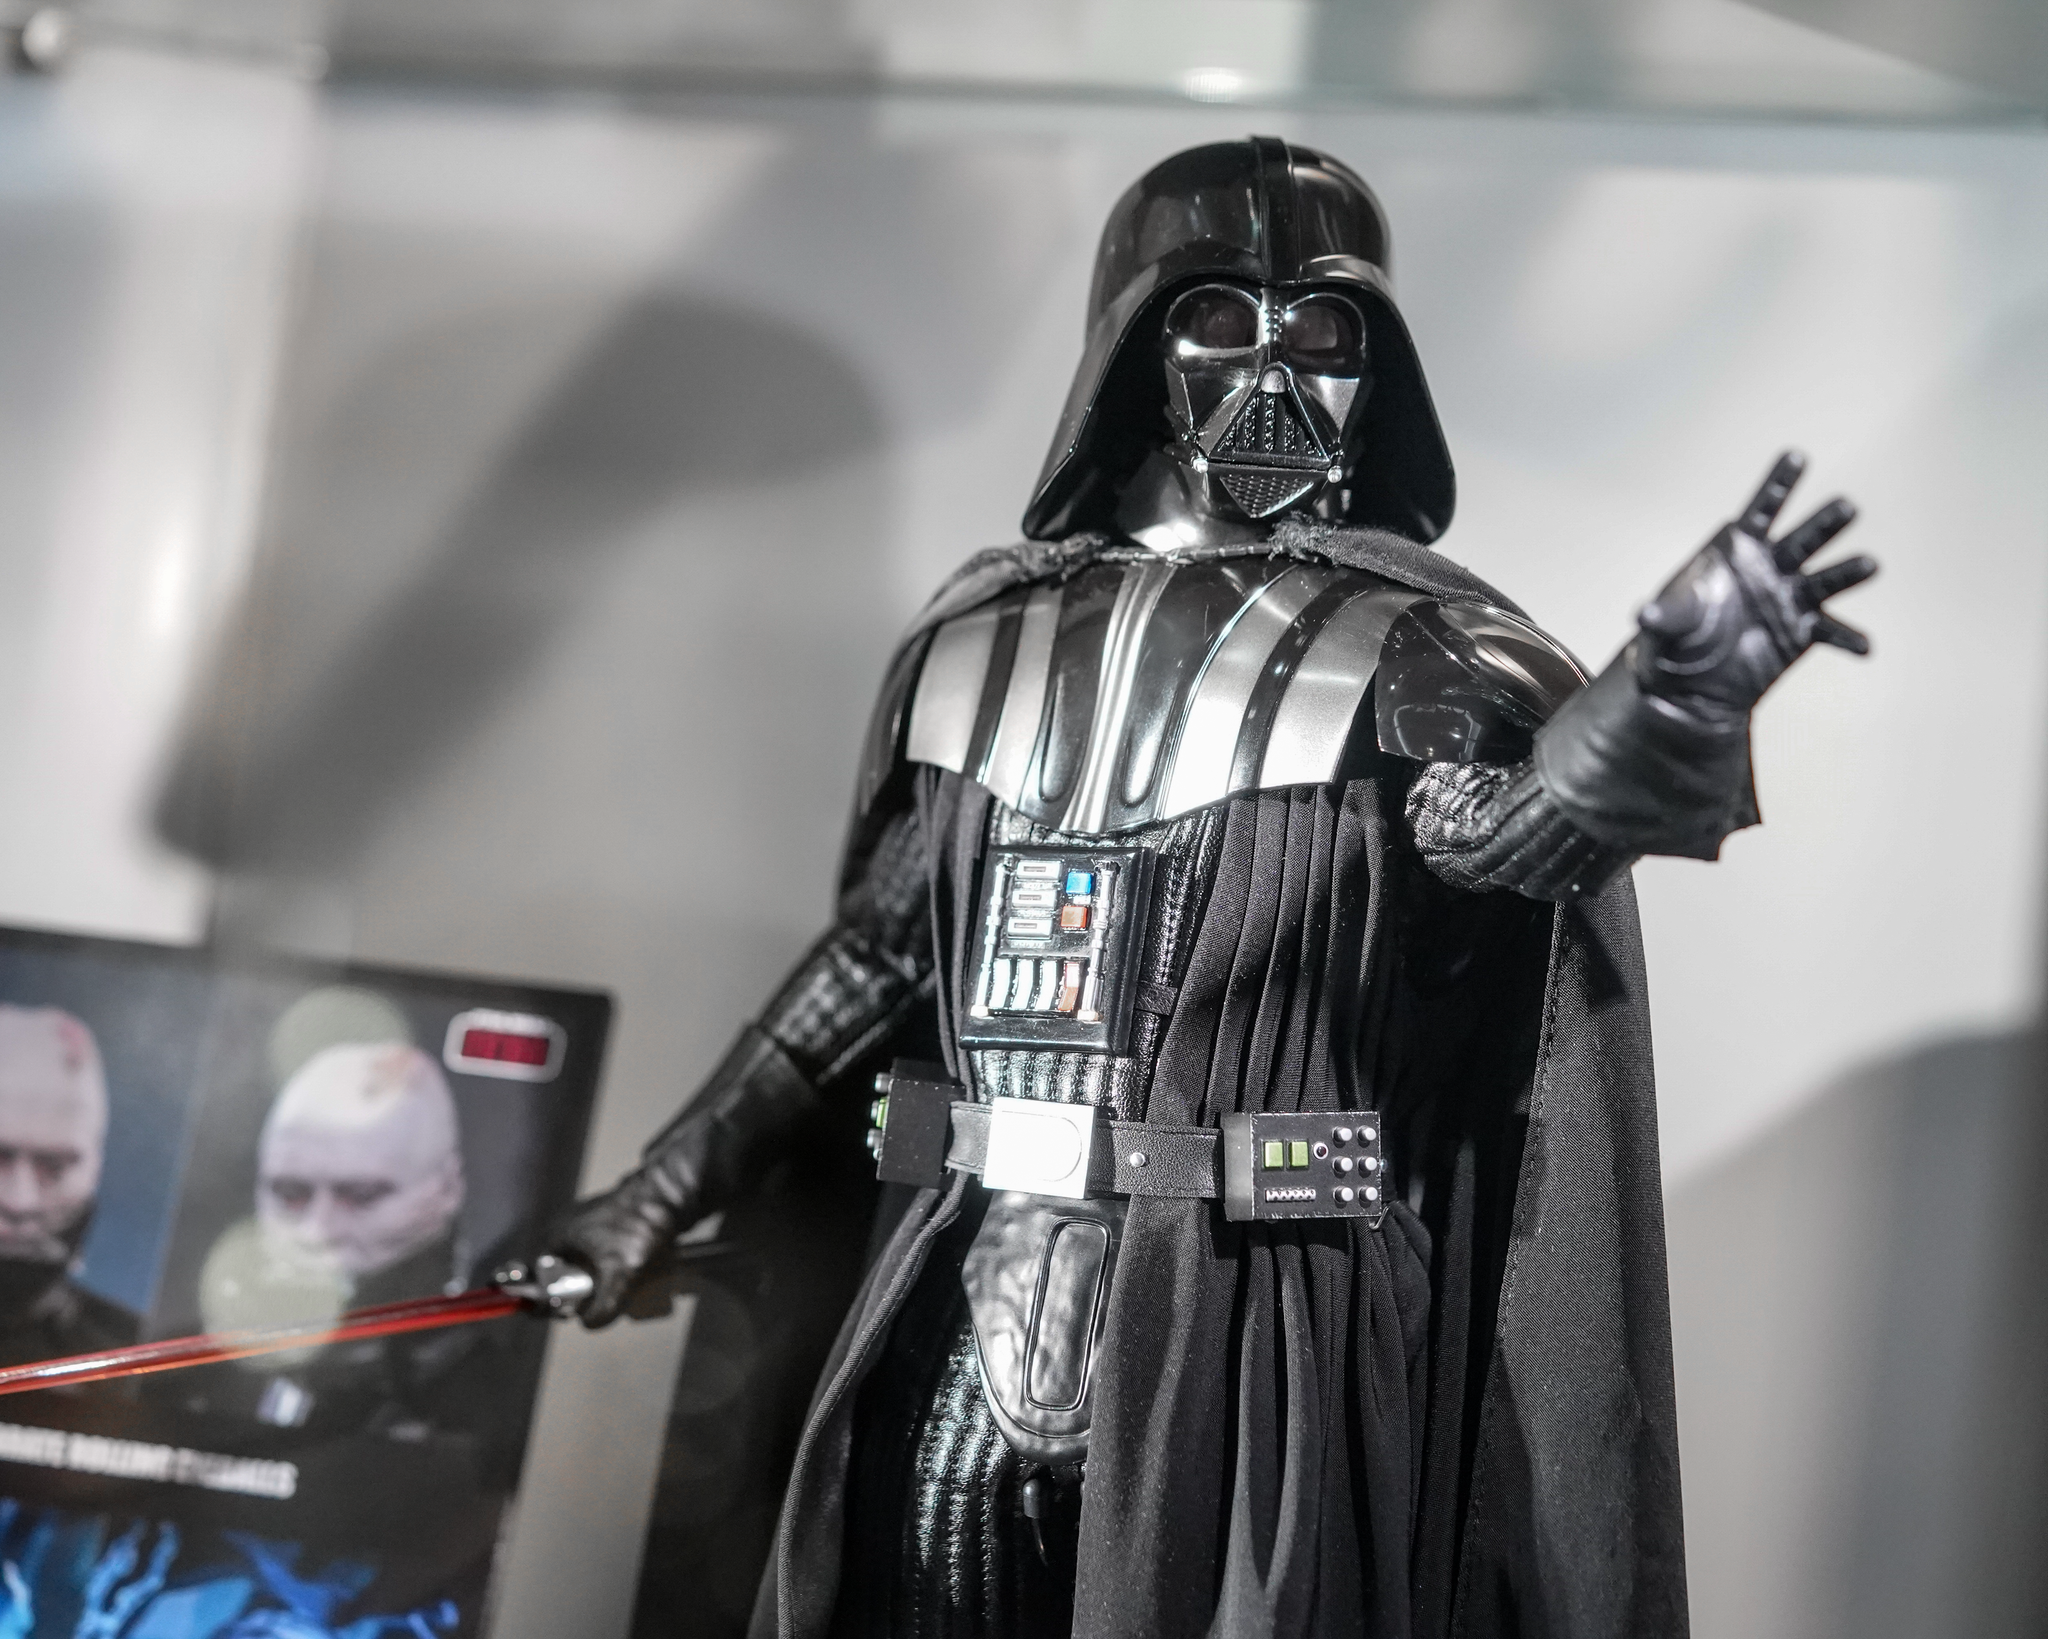 Figurine Hot Toys Dark Vador Star Wars Episode VI 40th Anniversary